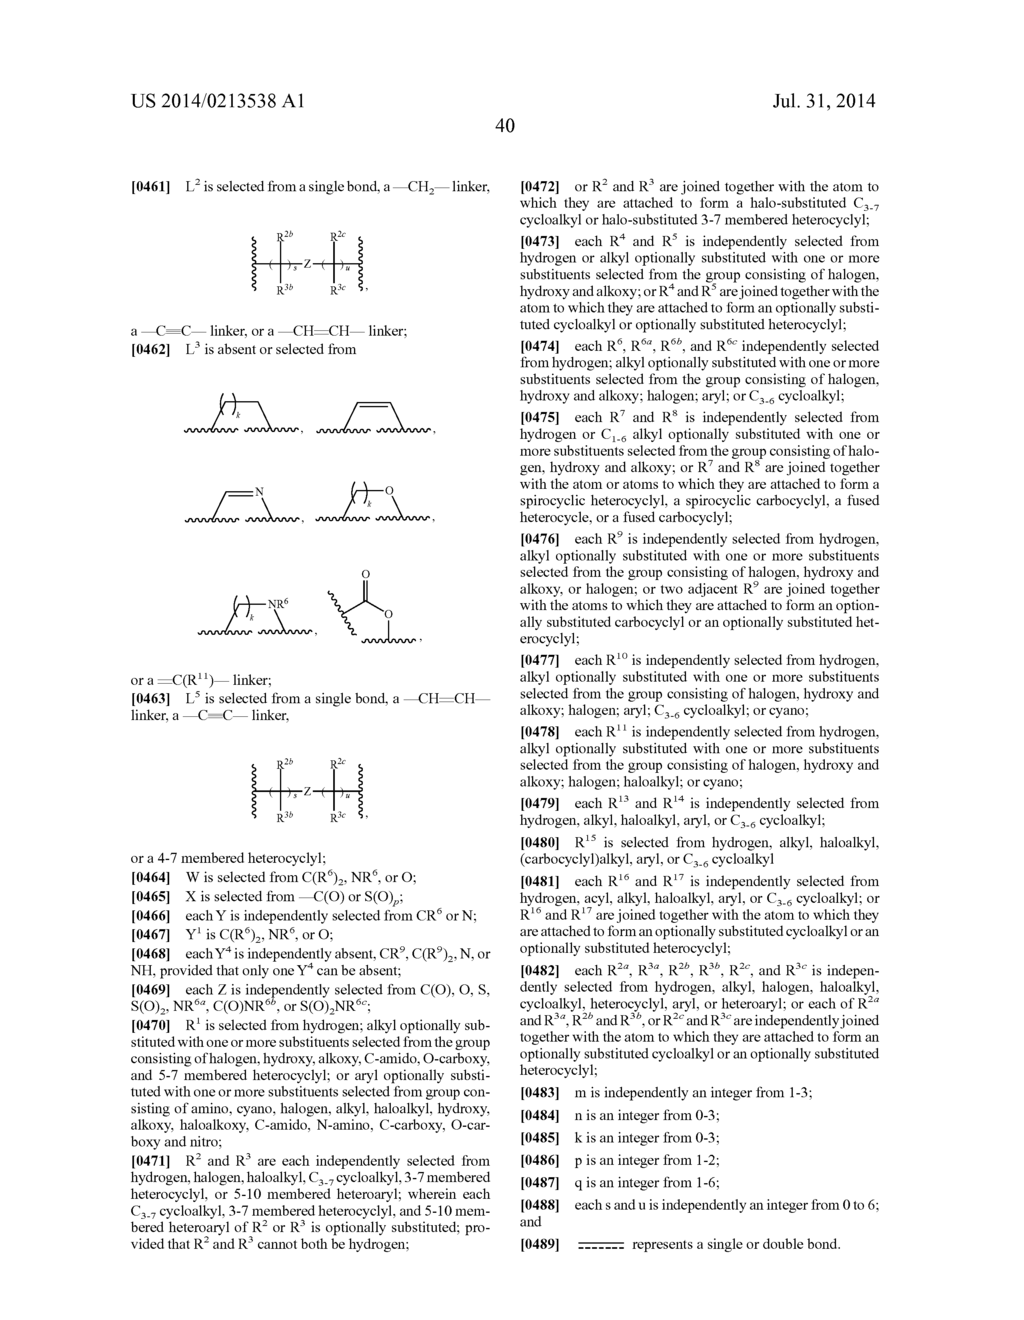 LYSOPHOSPHATIDIC ACID RECEPTOR ANTAGONISTS - diagram, schematic, and image 41